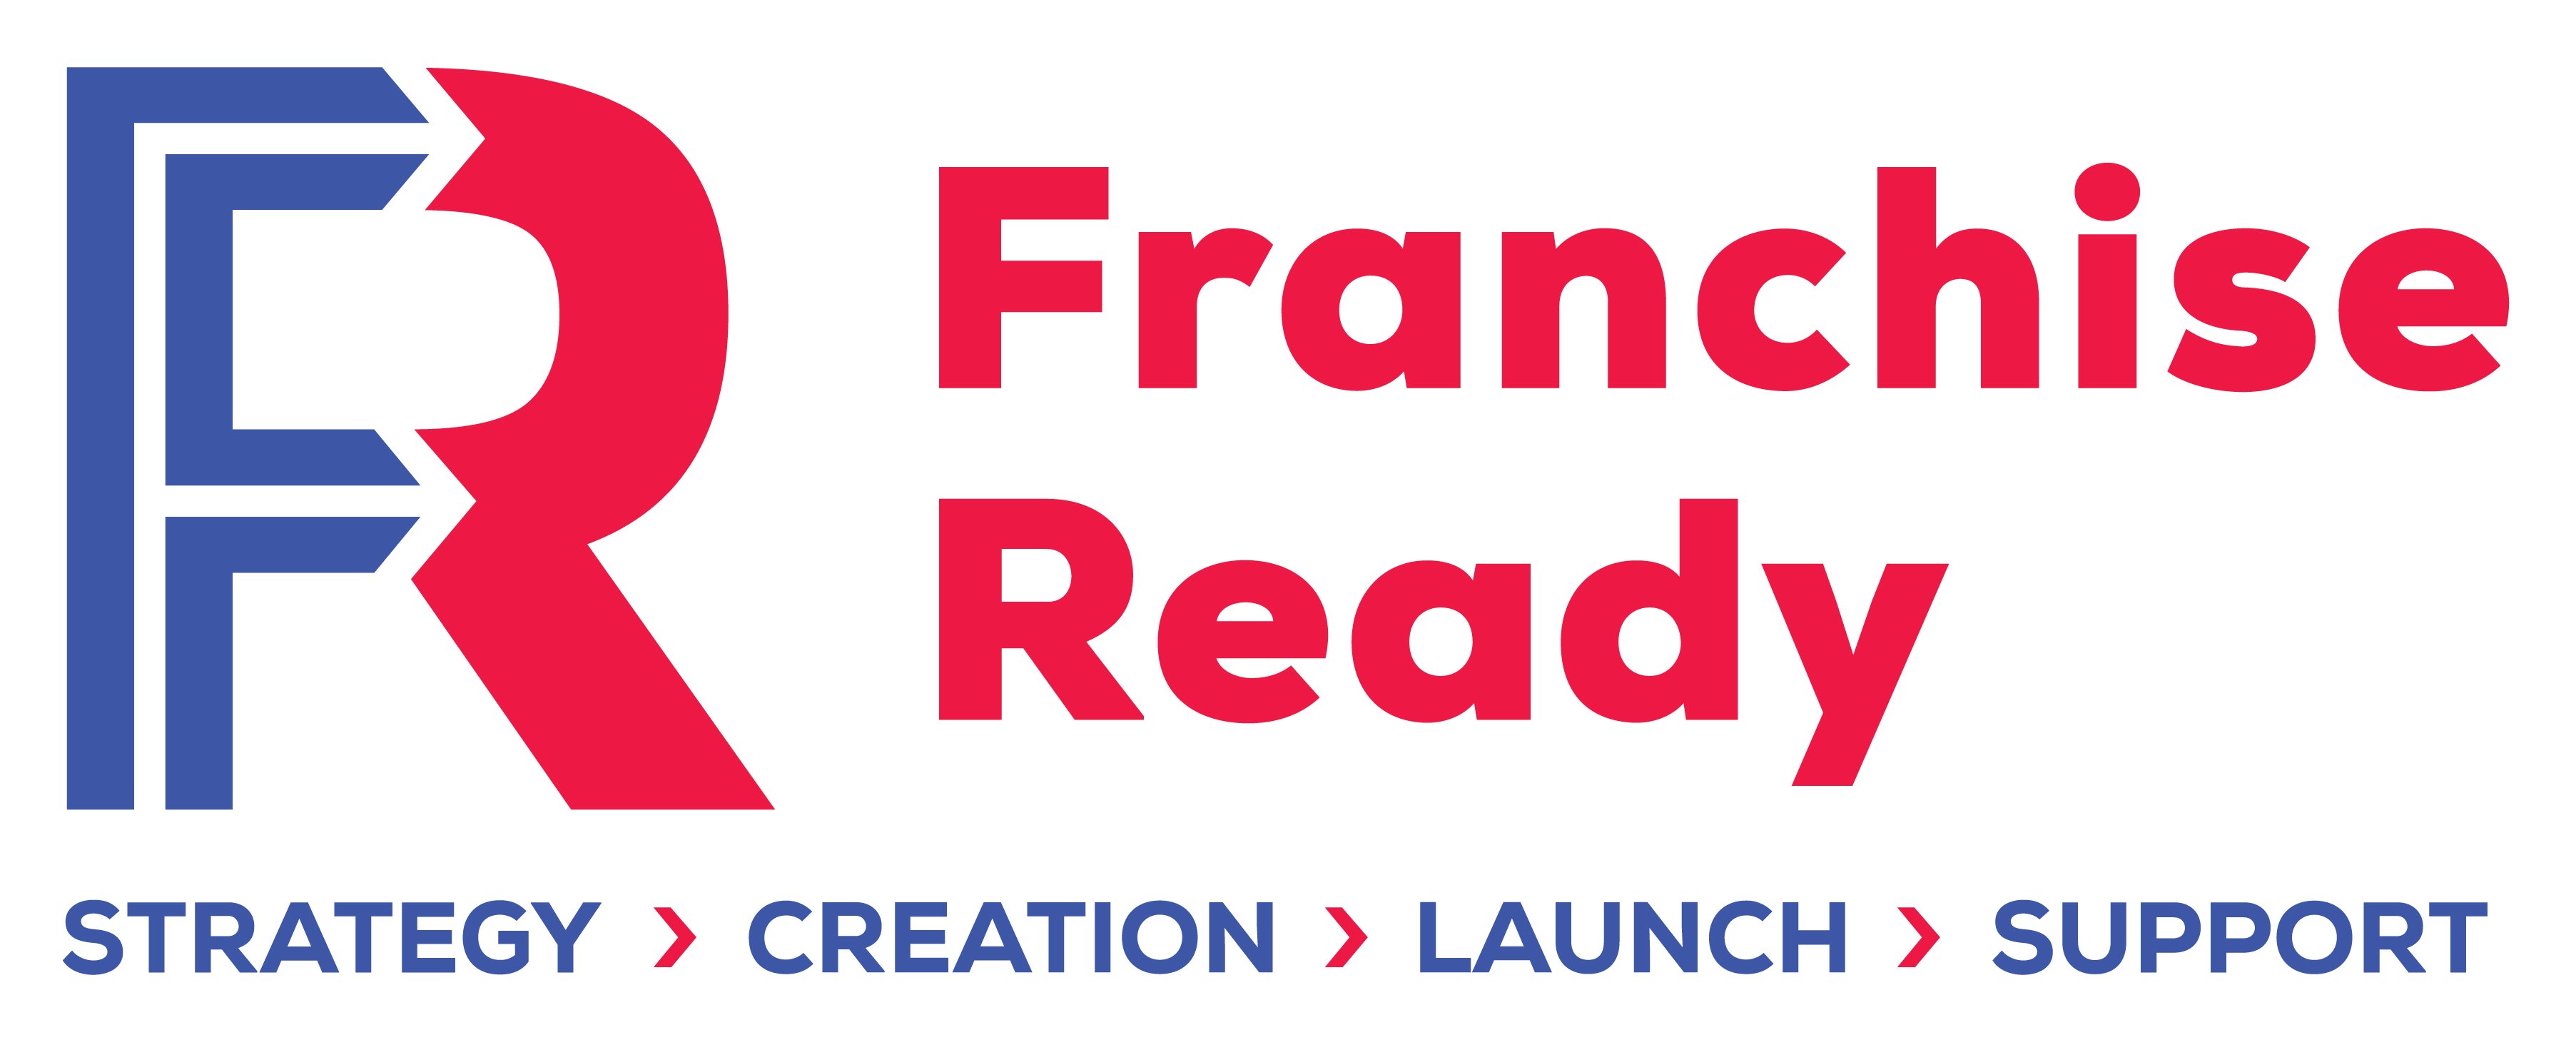 Franchise Ready logo